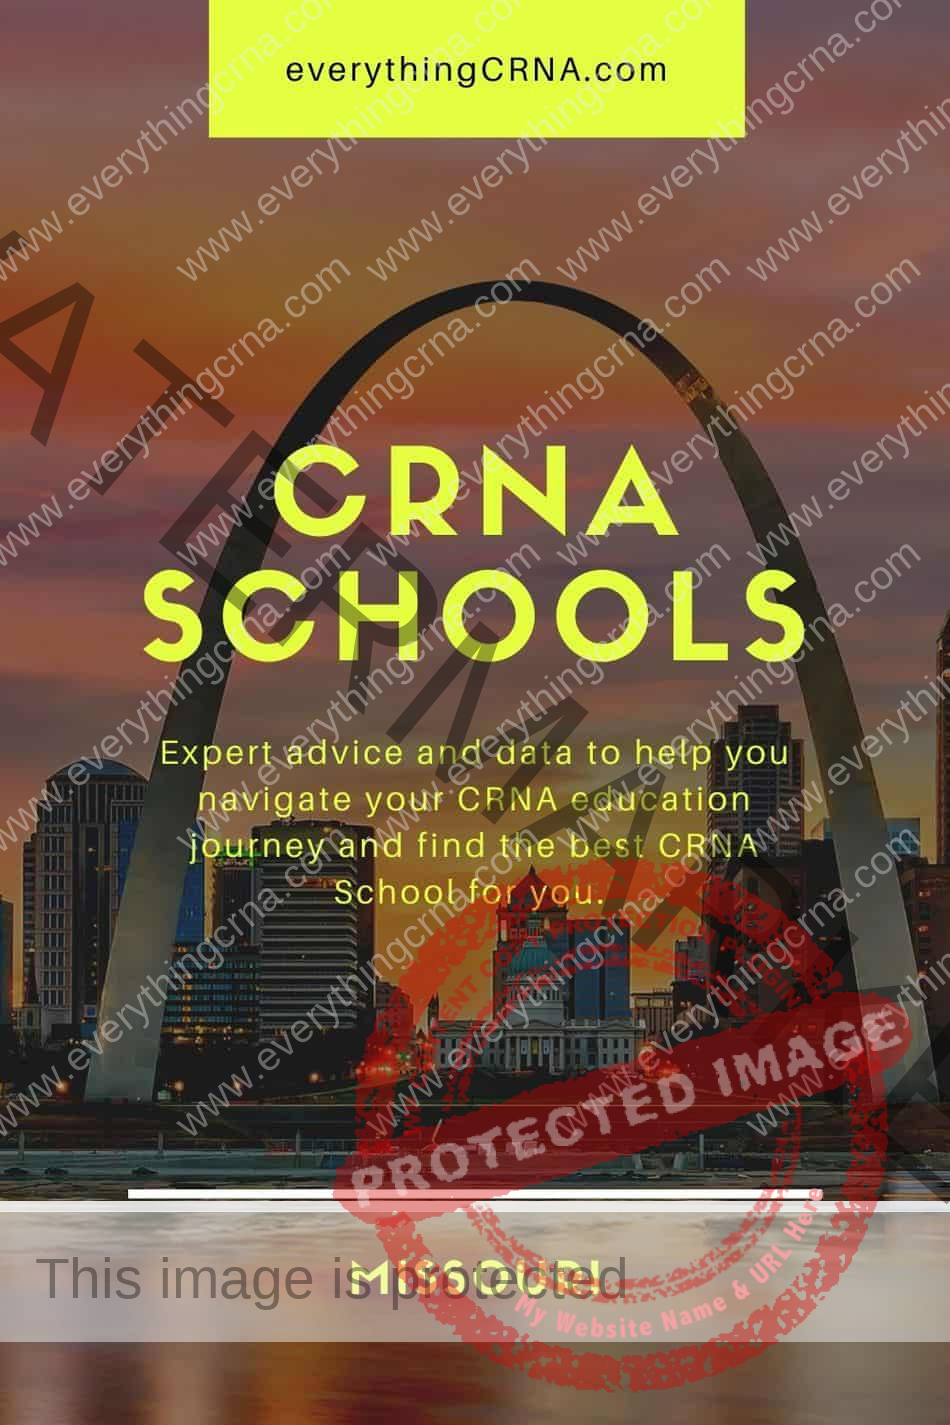 CRNA Schools in Missouri